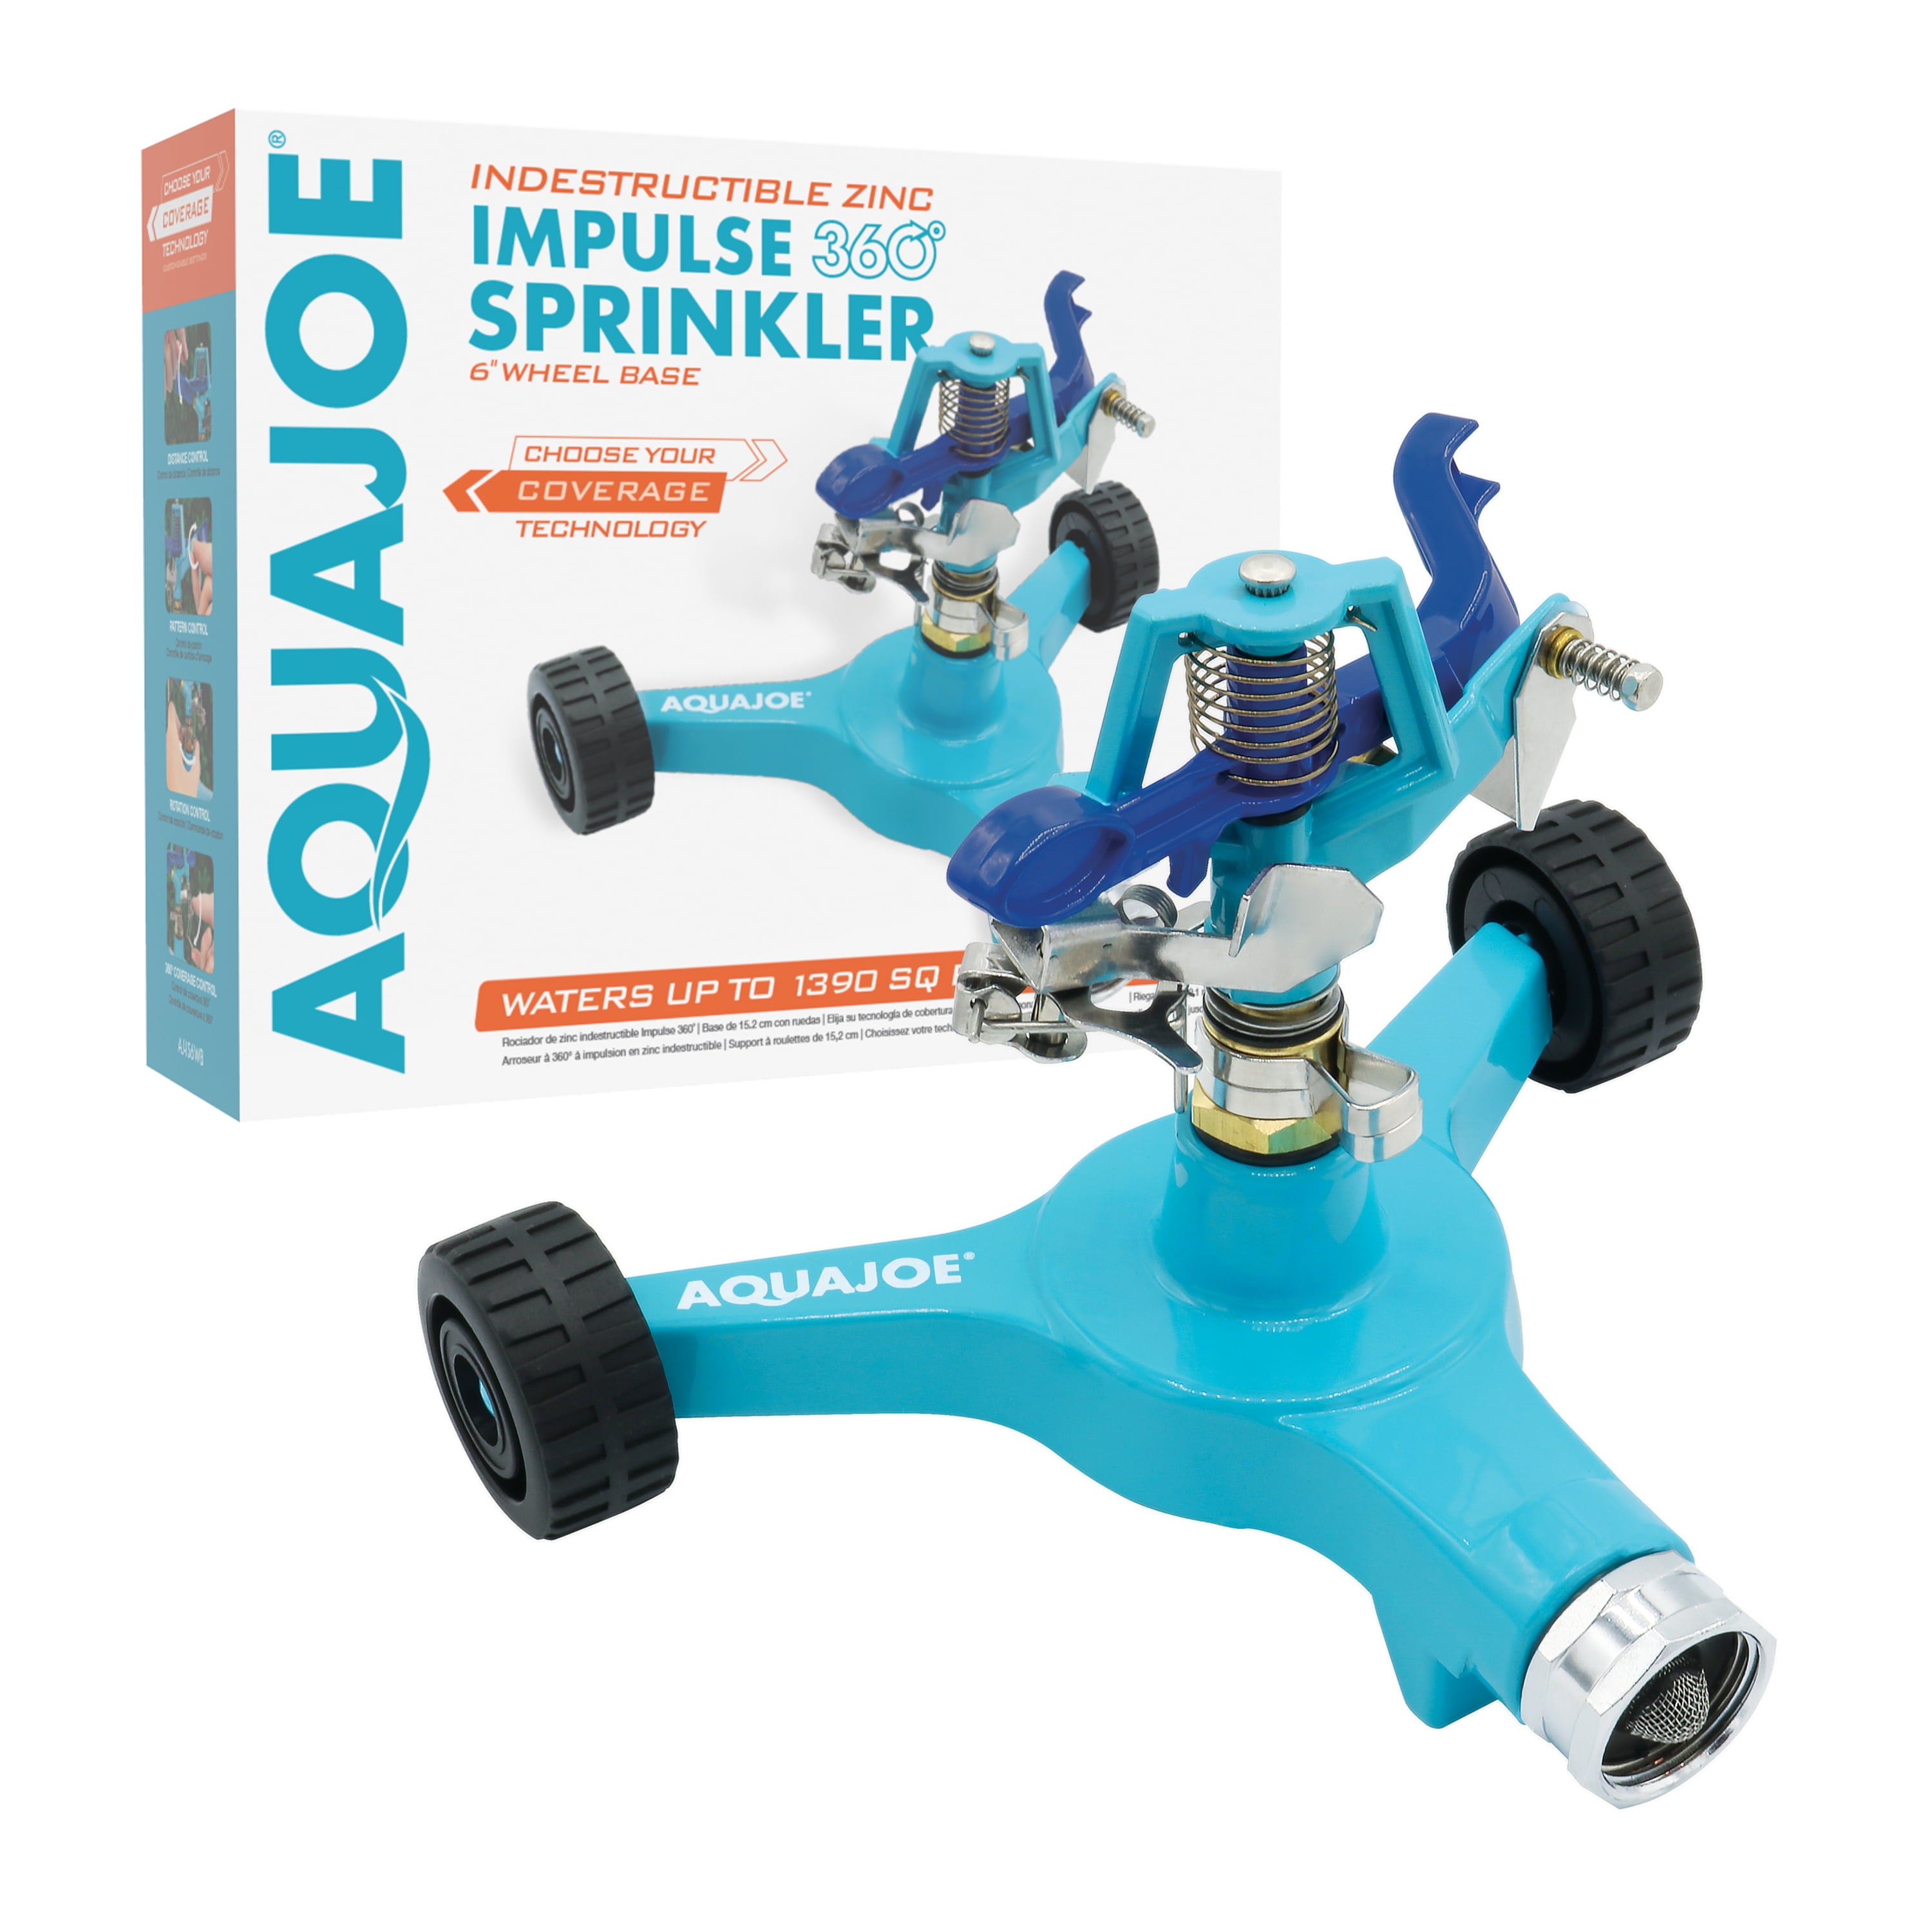 Aqua Joe Indestructible Zinc Impulse 360º Sprinkler w/ Wheels $10 + Free S&H w/ Walmart+ or $35+